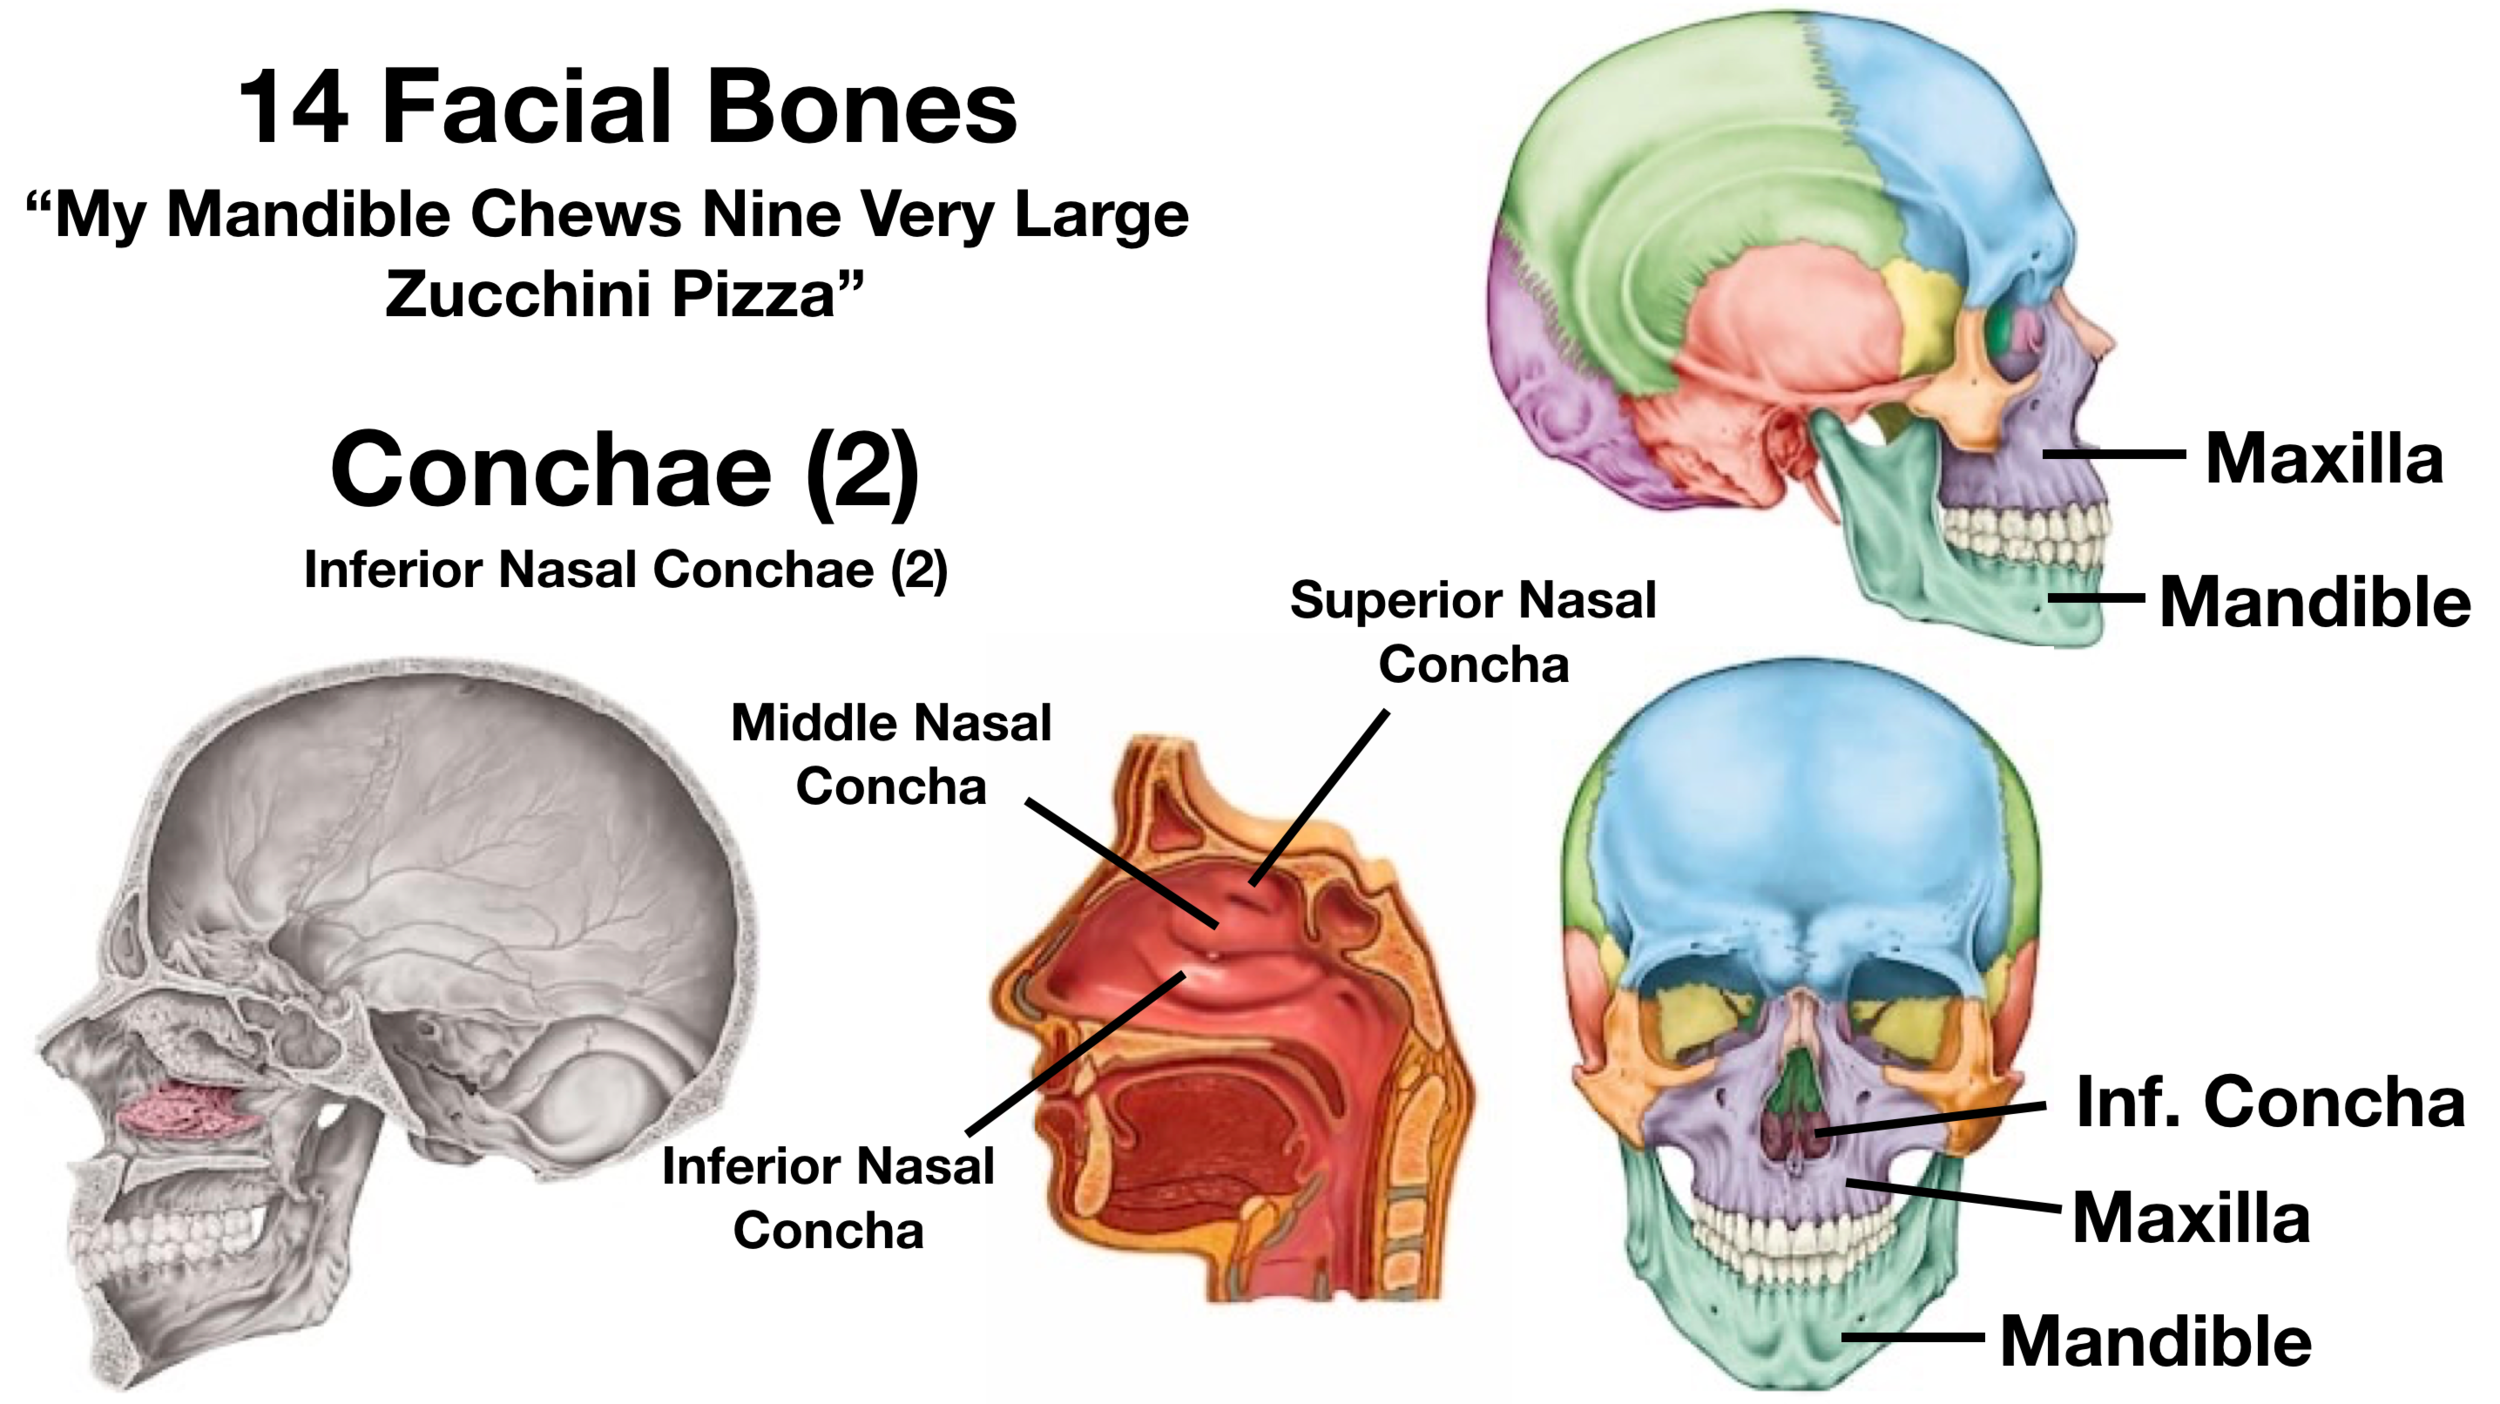 temporal bone function